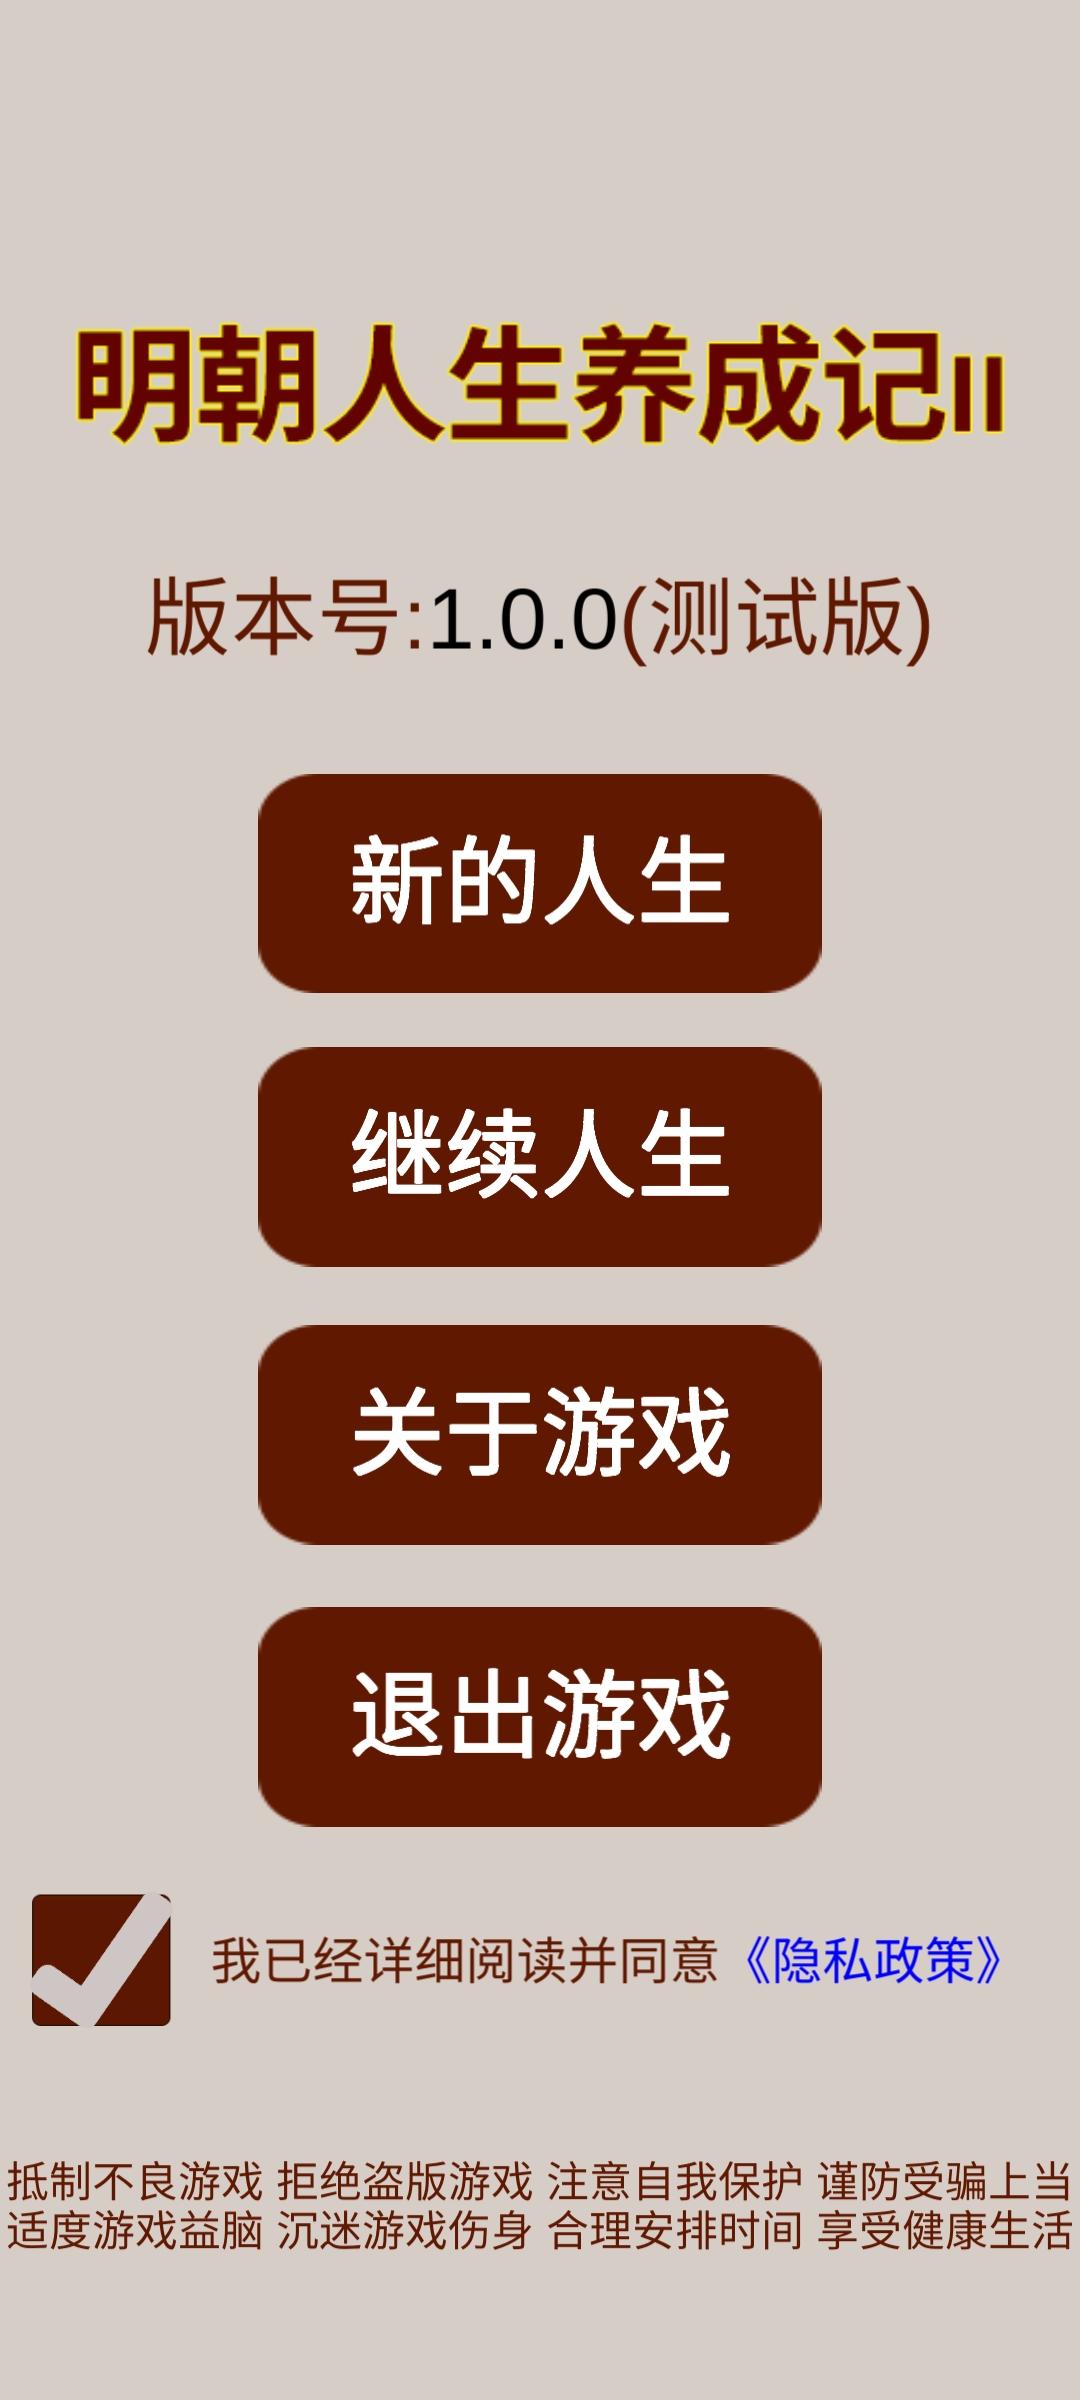 Screenshot 1 of История развития жизни династии Мин 2 